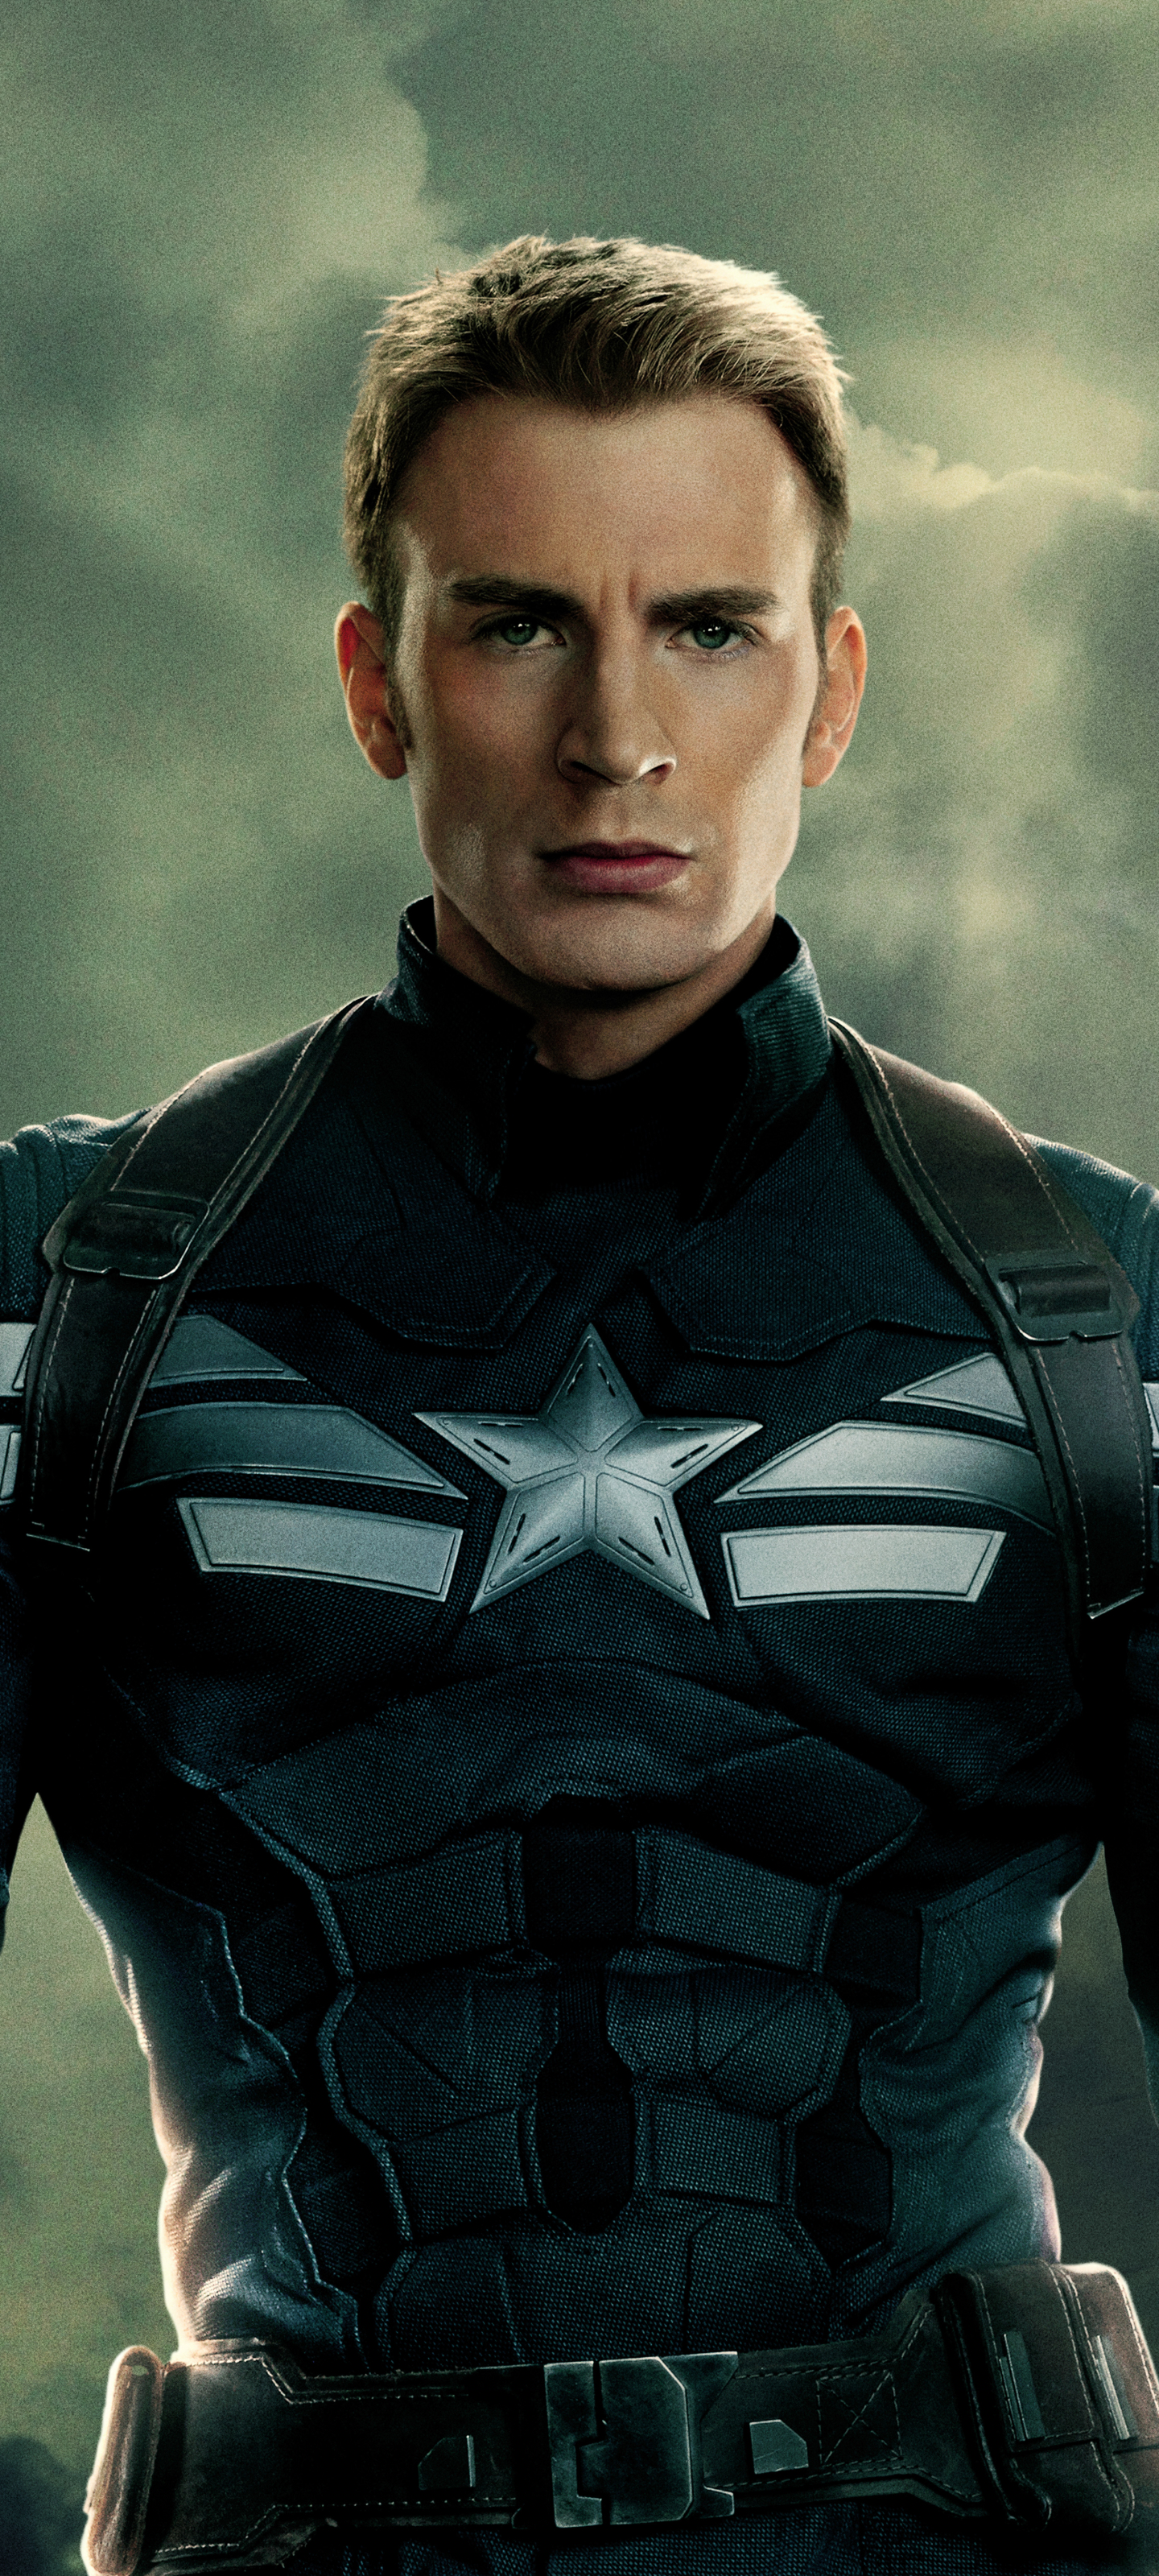 Avengers movie  Chris Evans as Captain America 2K wallpaper download